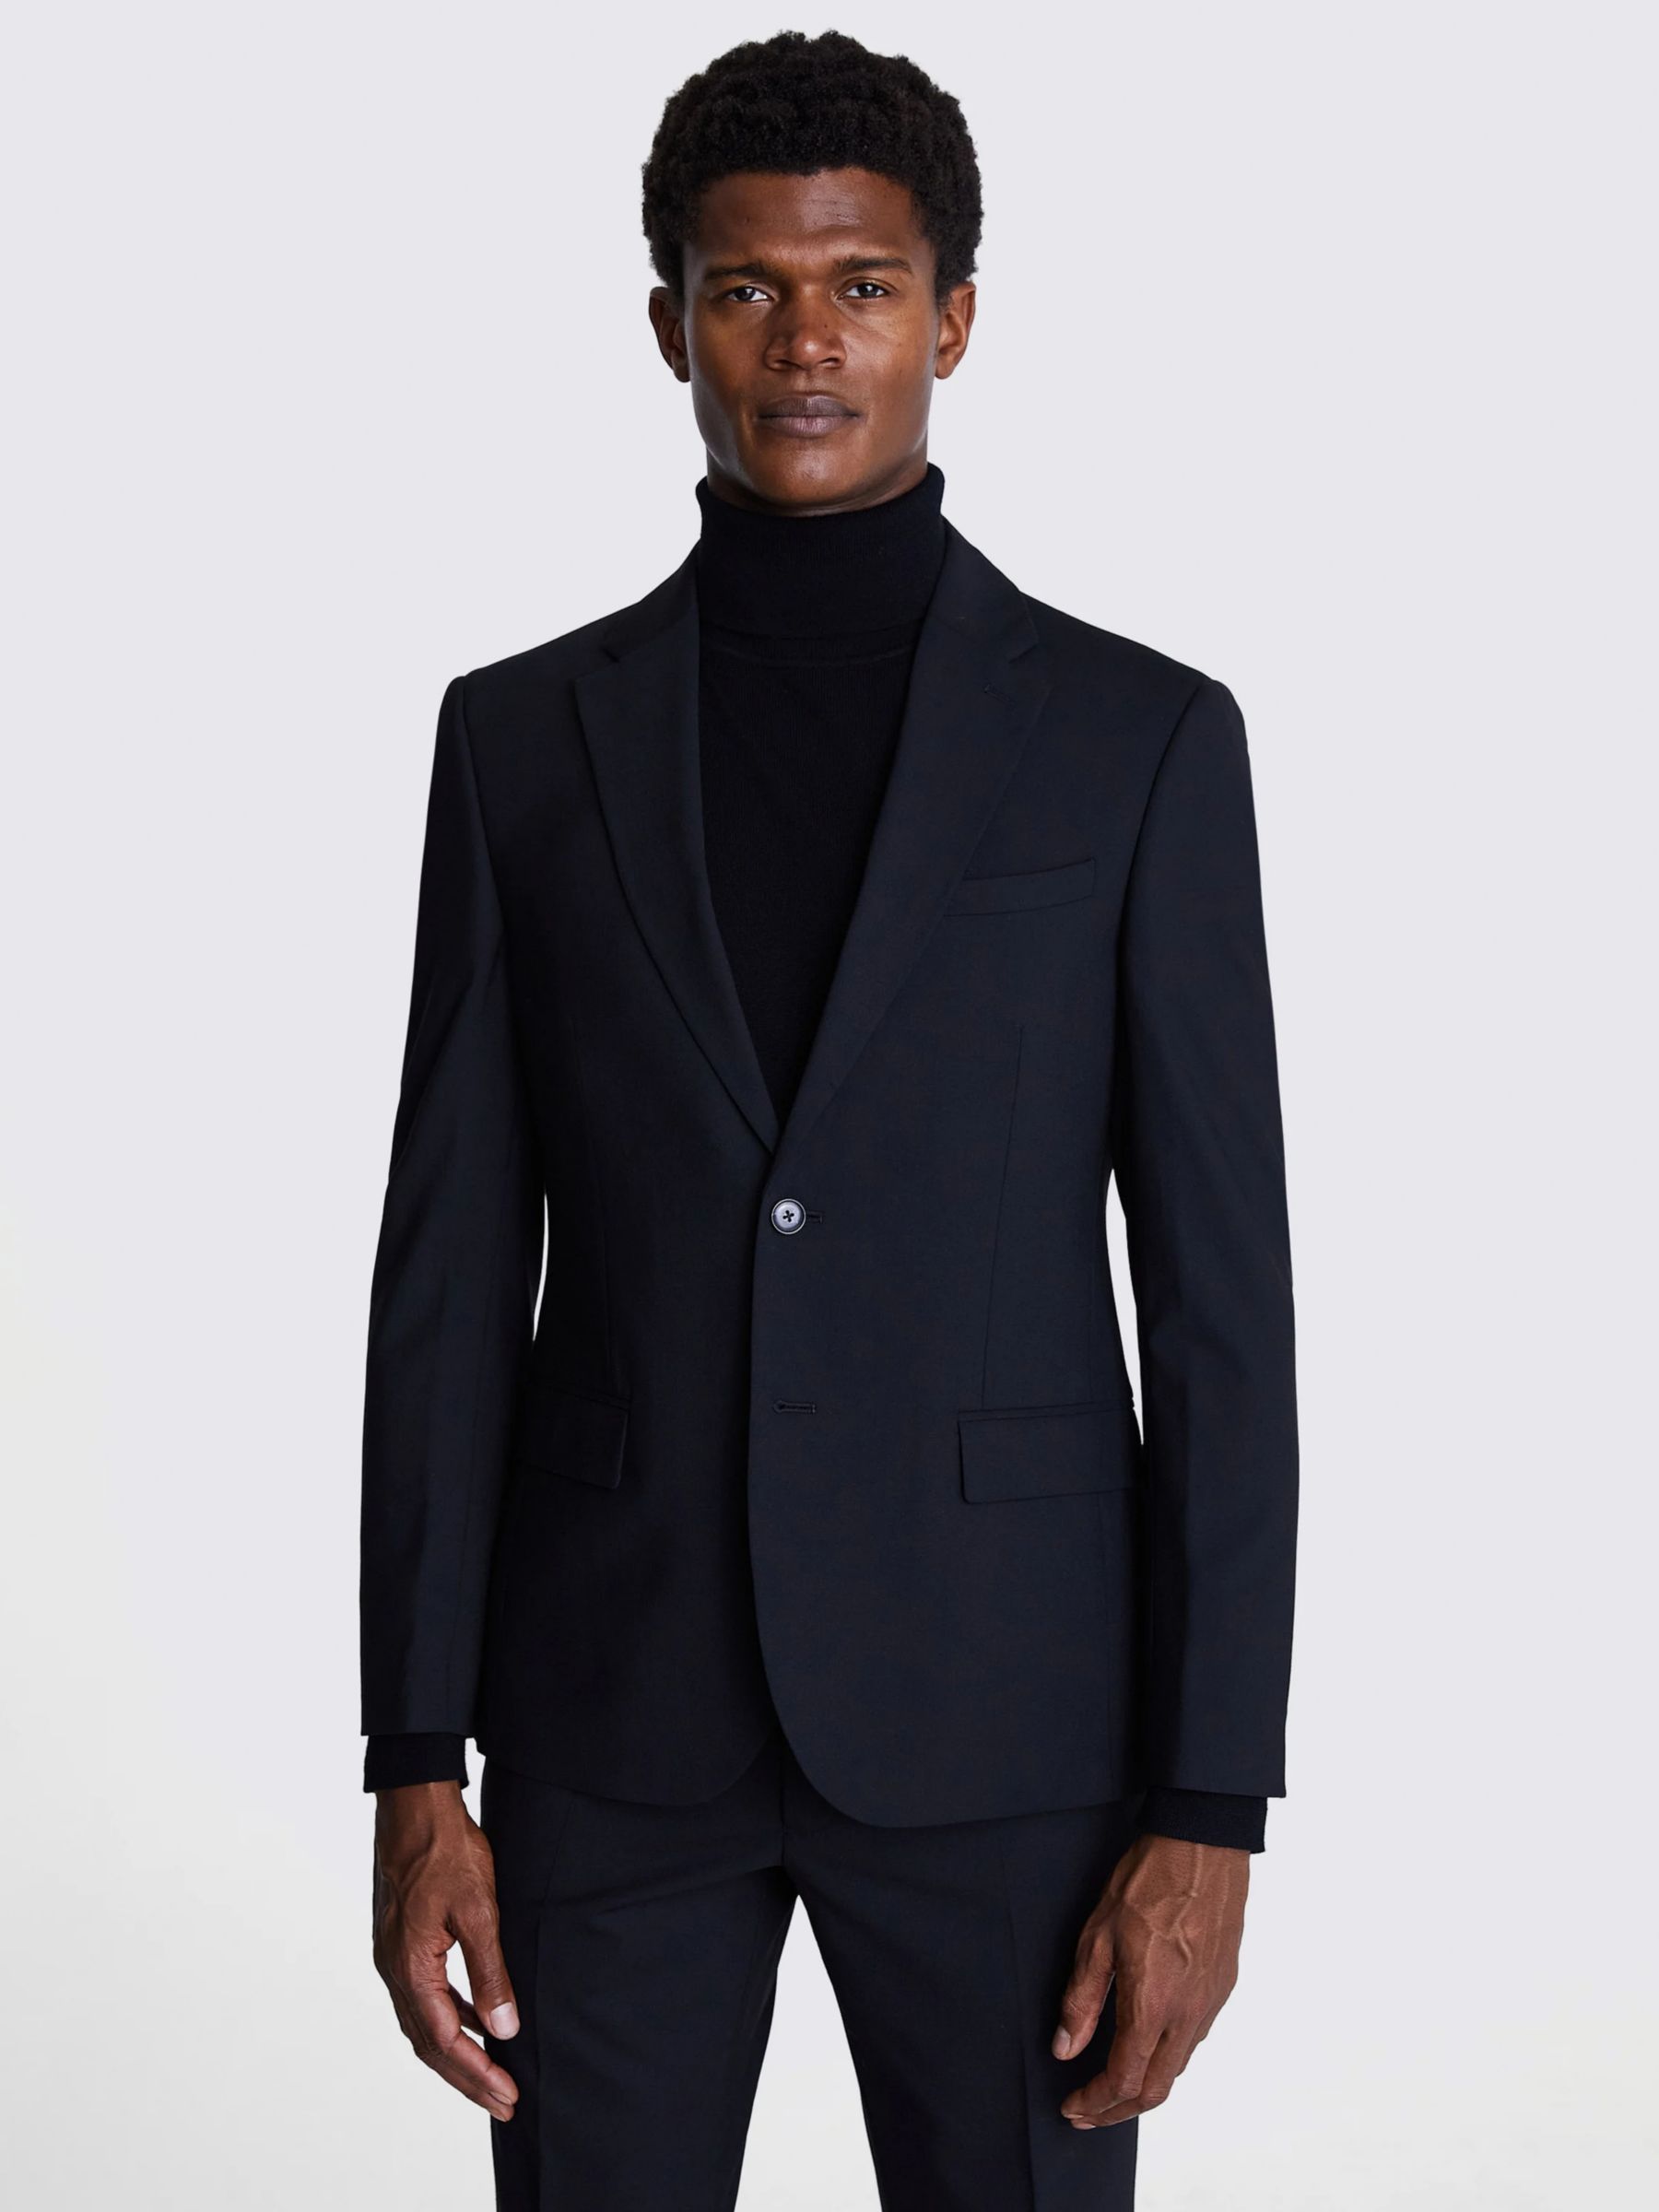 Moss x DKNY Wool Blend Slim Fit Suit Jacket, Black at John Lewis & Partners